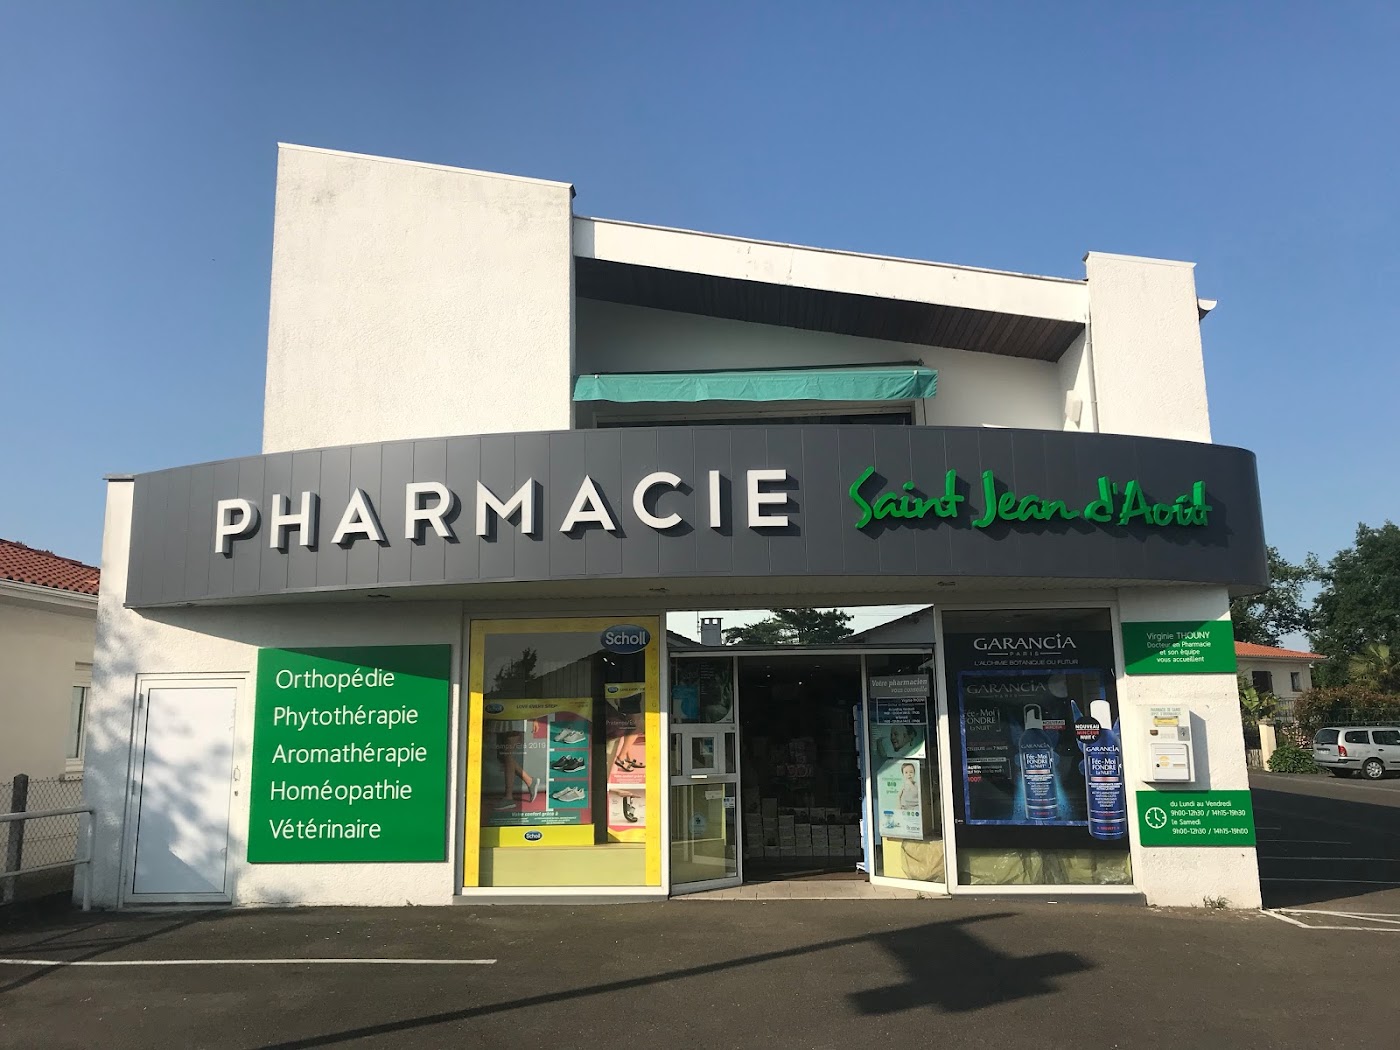 Pharmacie Saint Jean d'Août